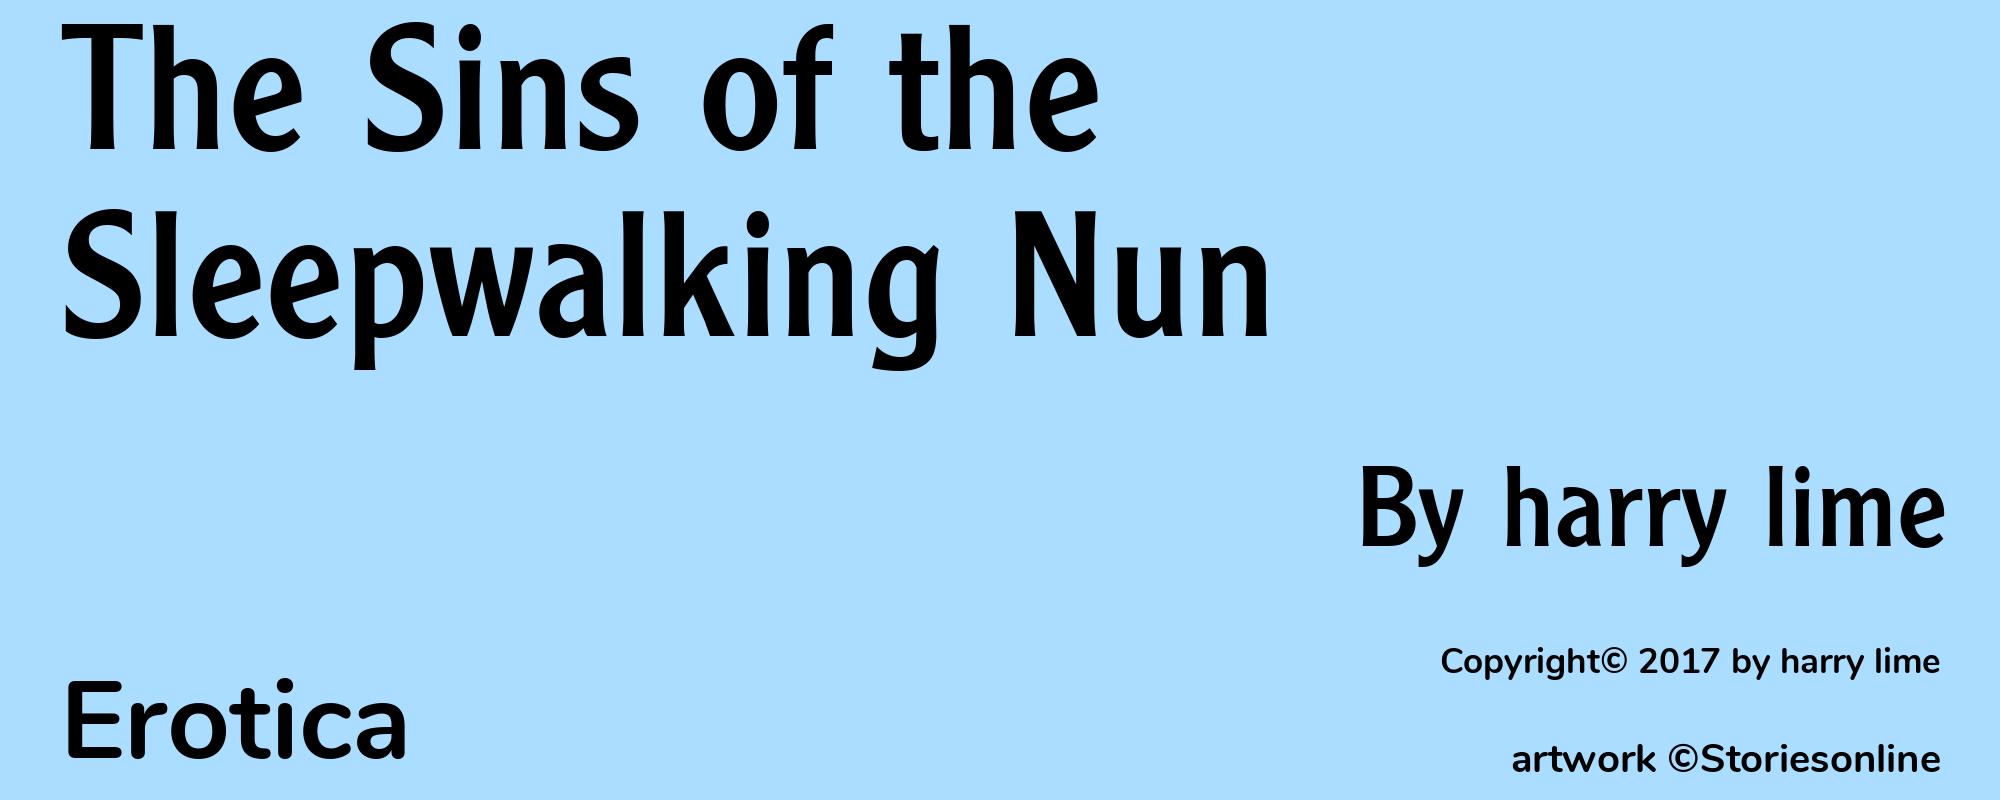 The Sins of the Sleepwalking Nun - Cover